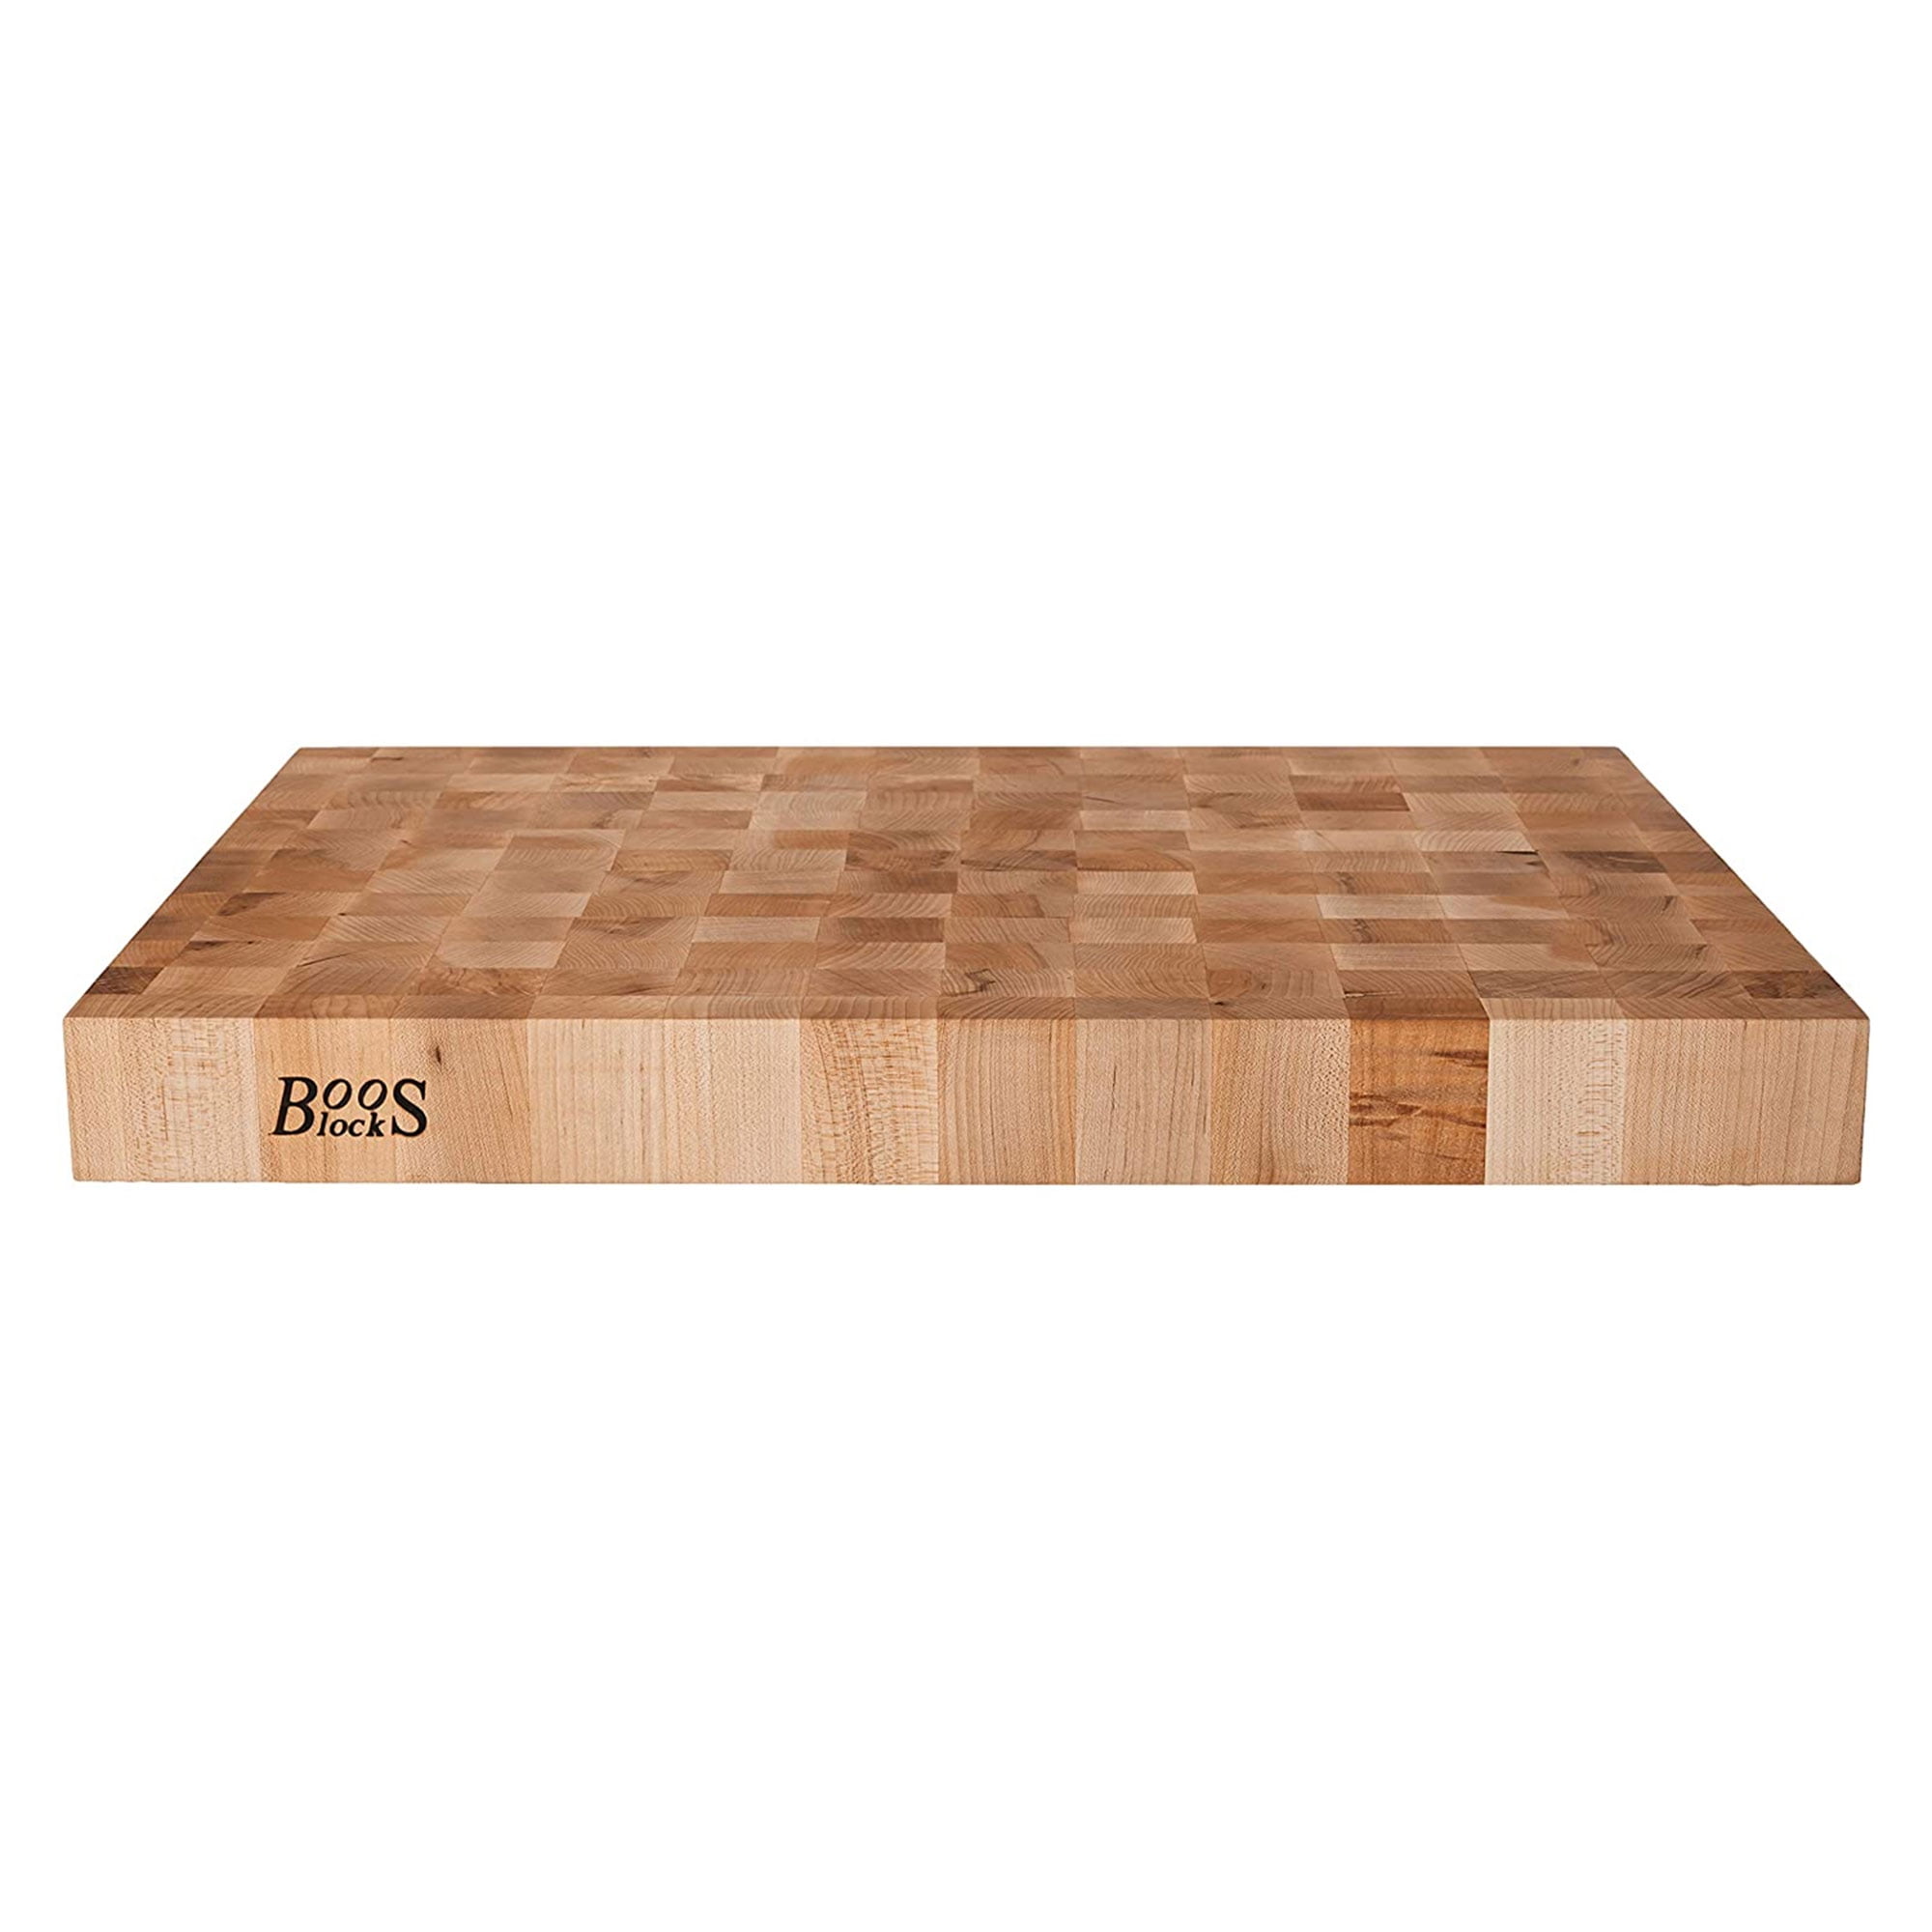 JOHN BOOS 20 in. x 15 in. Rectangular Wood Edge Grain Cutting Board with  Natural Moisture Cream, Maple CB1054-1M2015150 + BWC-3 - The Home Depot